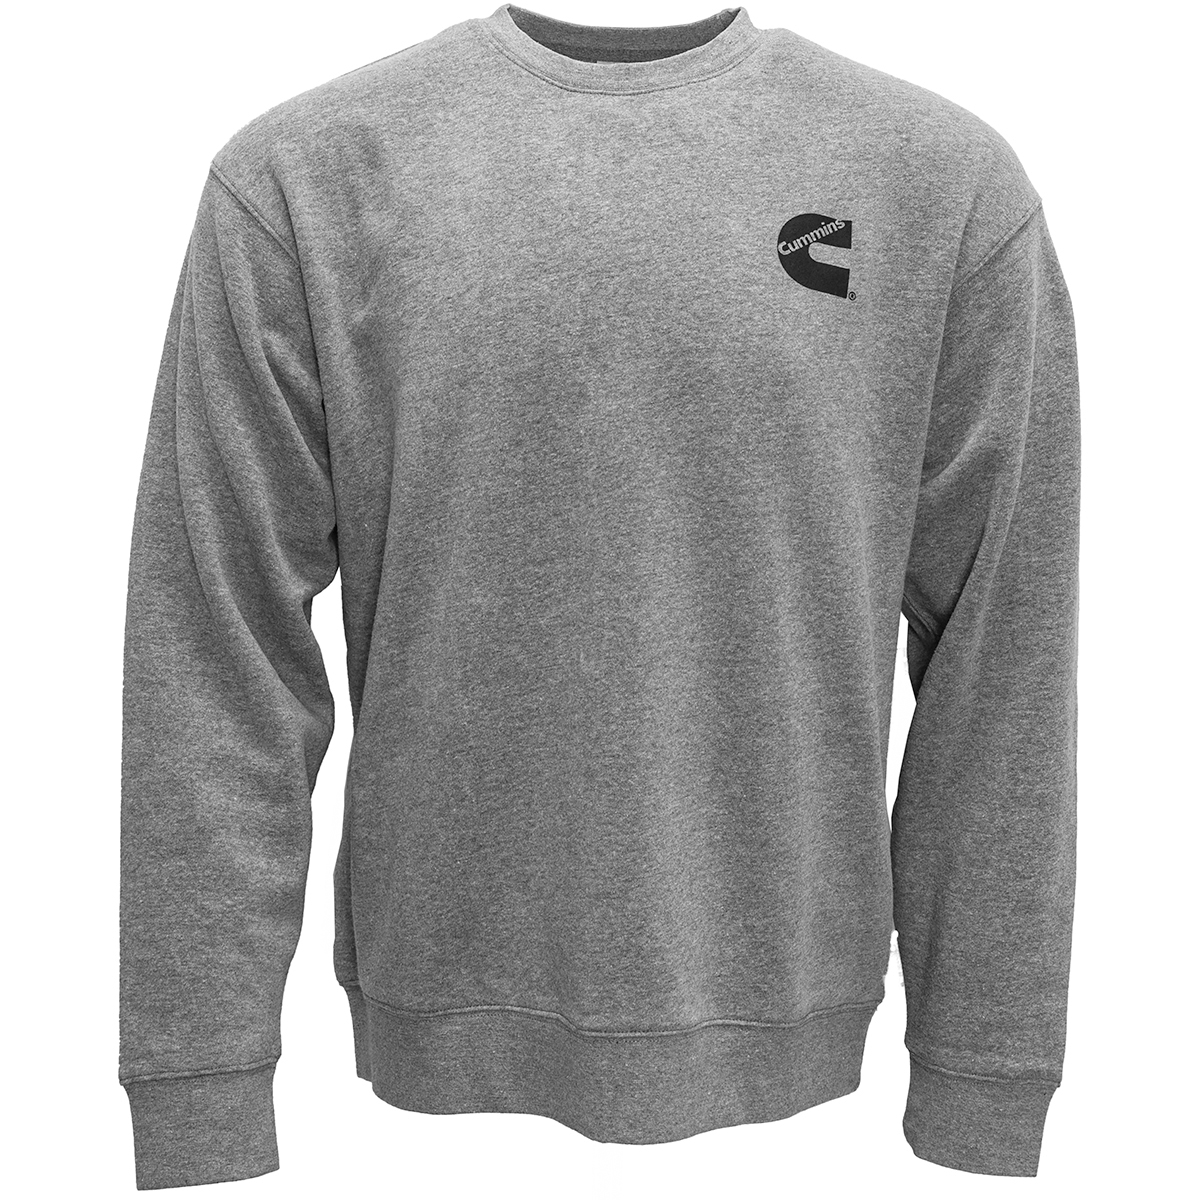 Cummins Unisex Fleece Crewneck Sweatshirt Gray in Comfy Cotton Blend XL CMN5025